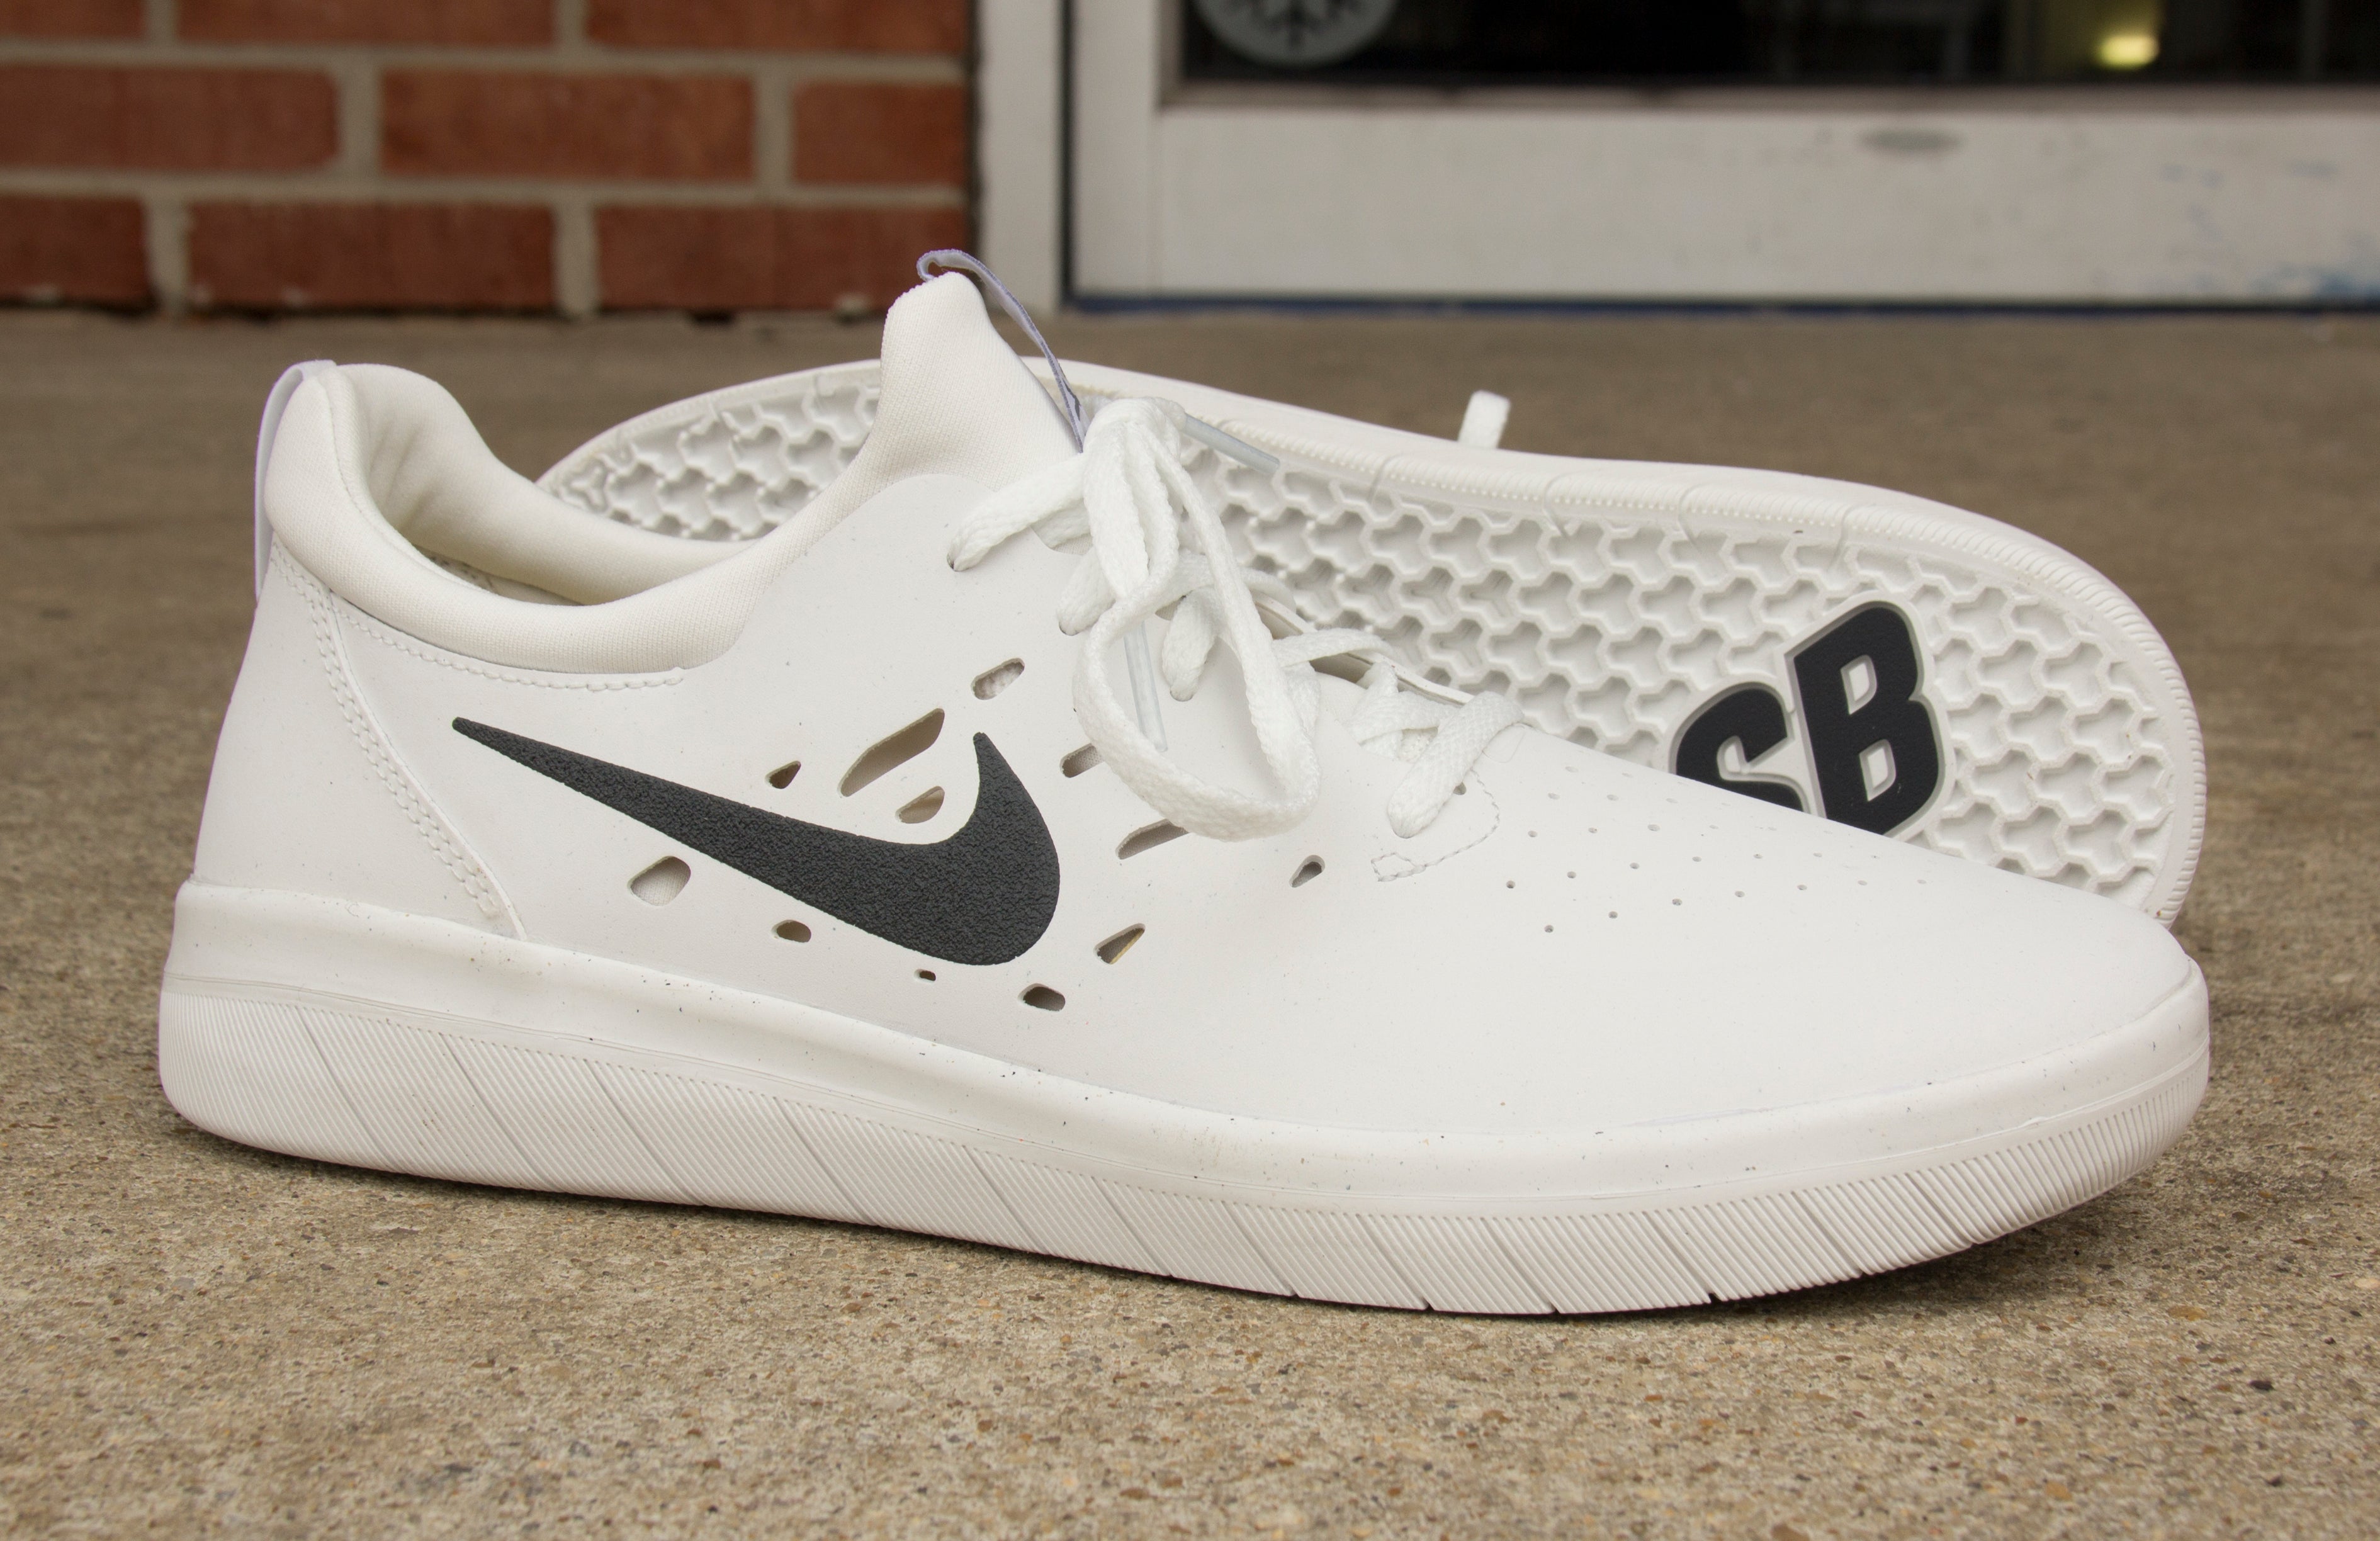 Nike SB Nyjah Huston Free Skate Shoe Now Available – Pure Boardshop